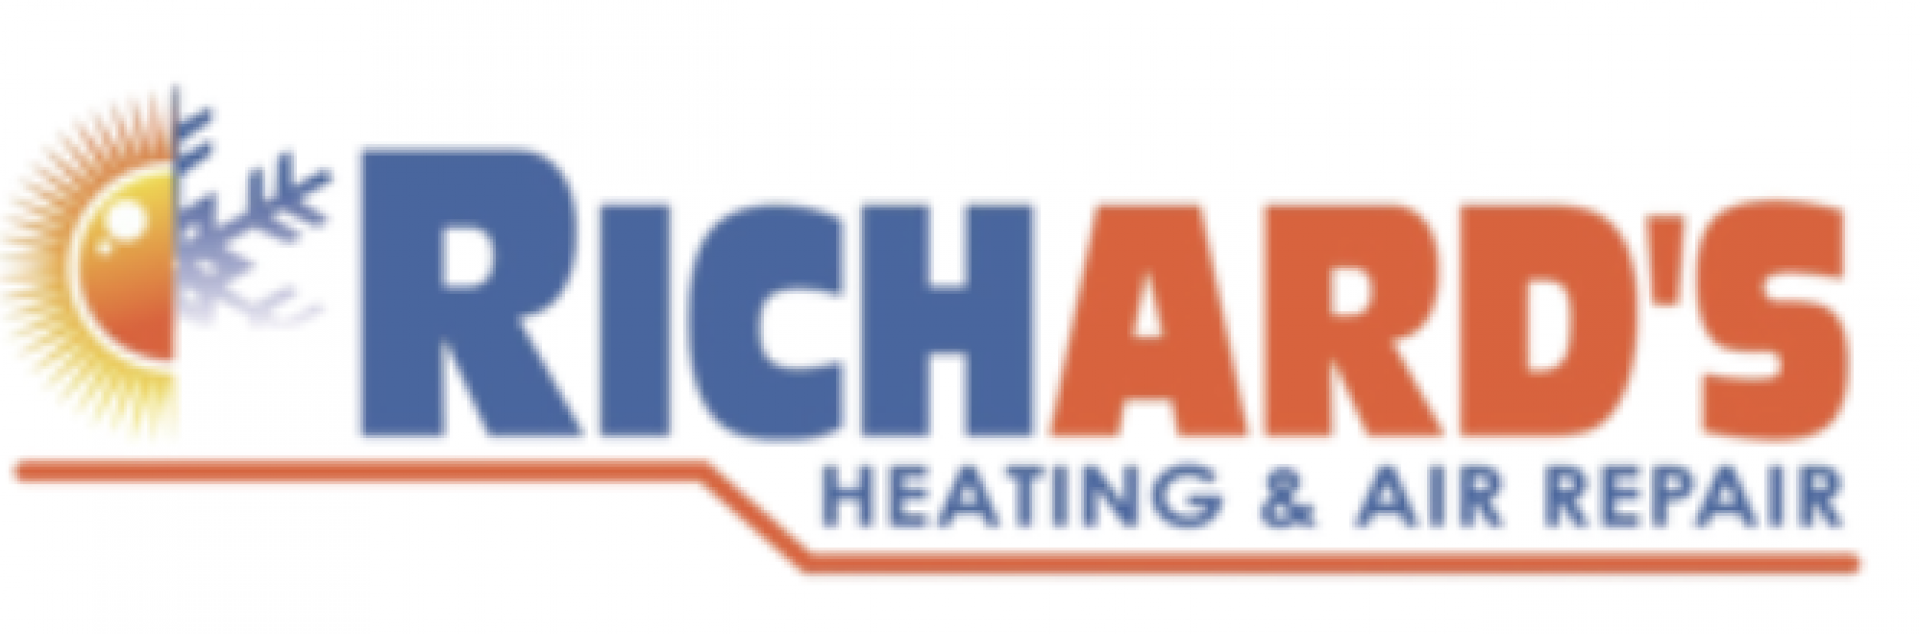 Richard's Heating & Air Repair Inc company logo